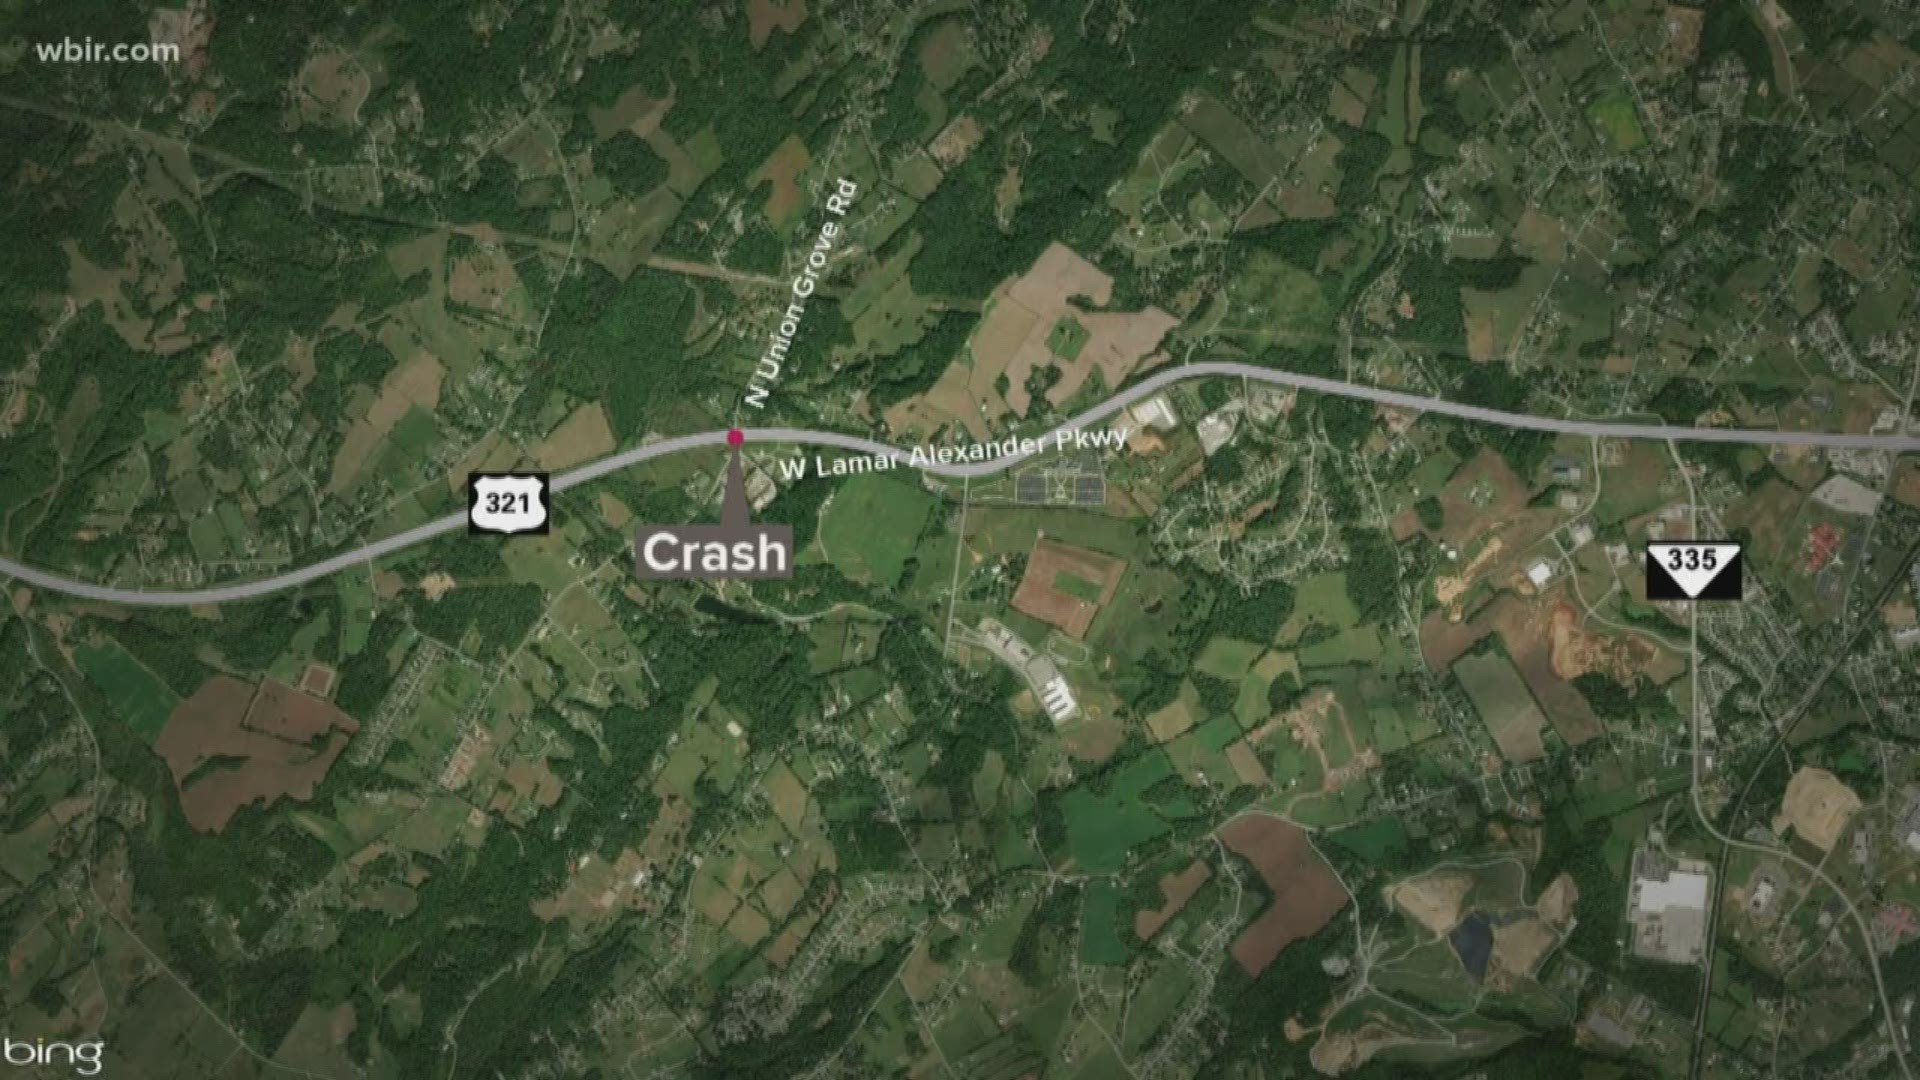 A fatal crash on Lamar Alexander Parkway at 7:43 a.m. Dec. 12 left a 65-year-old man dead.